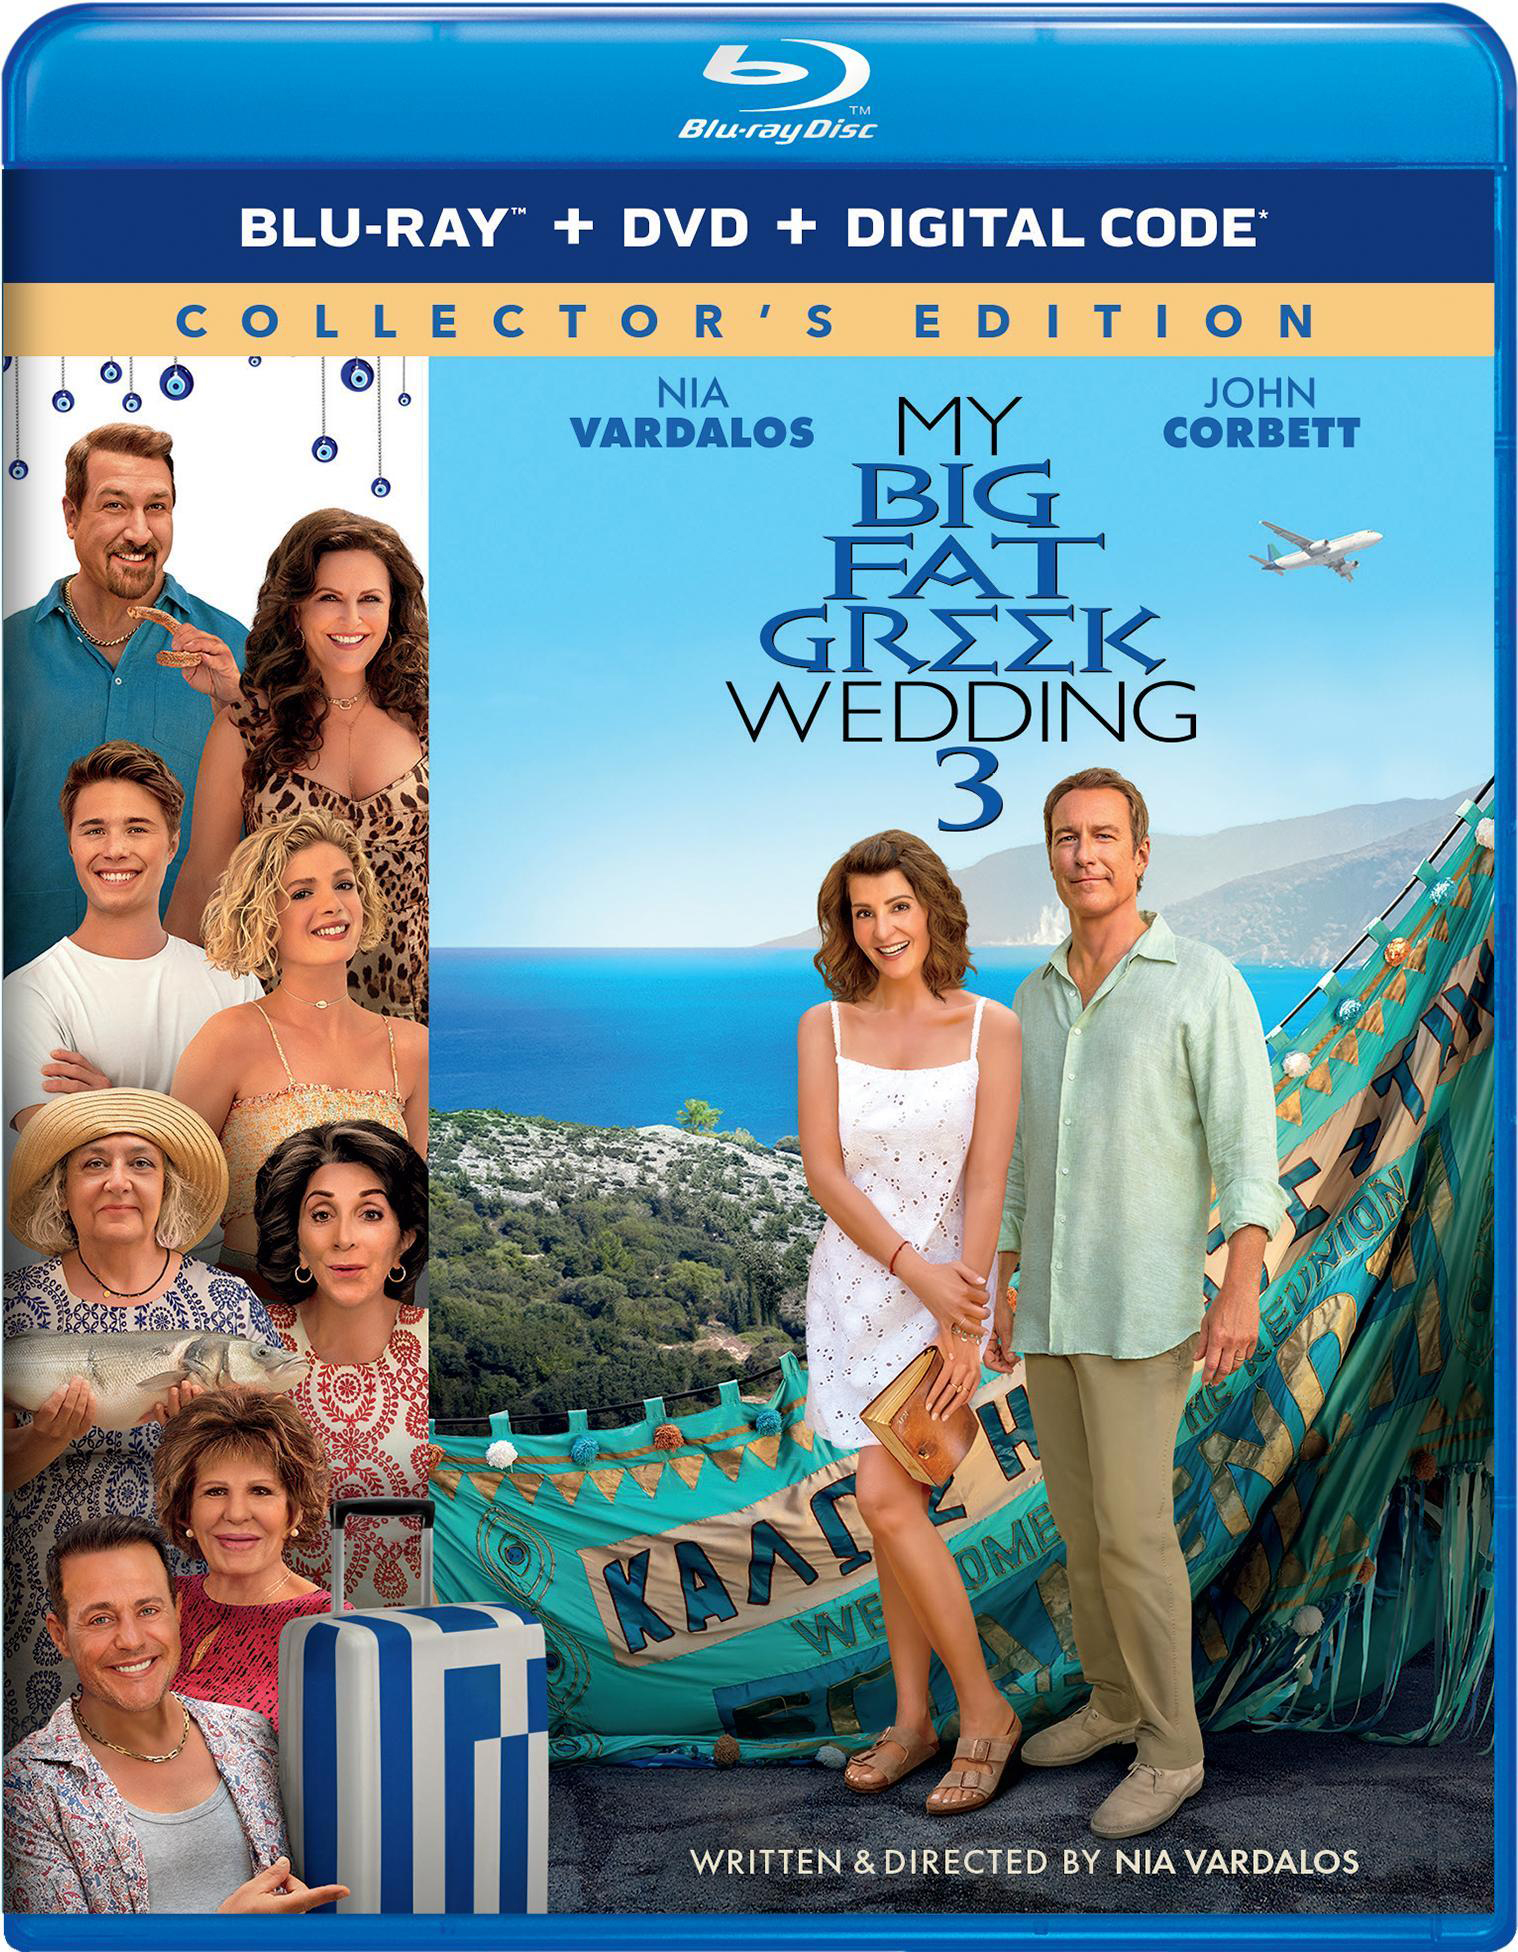  The Wedding [DVD] [1998] : Movies & TV